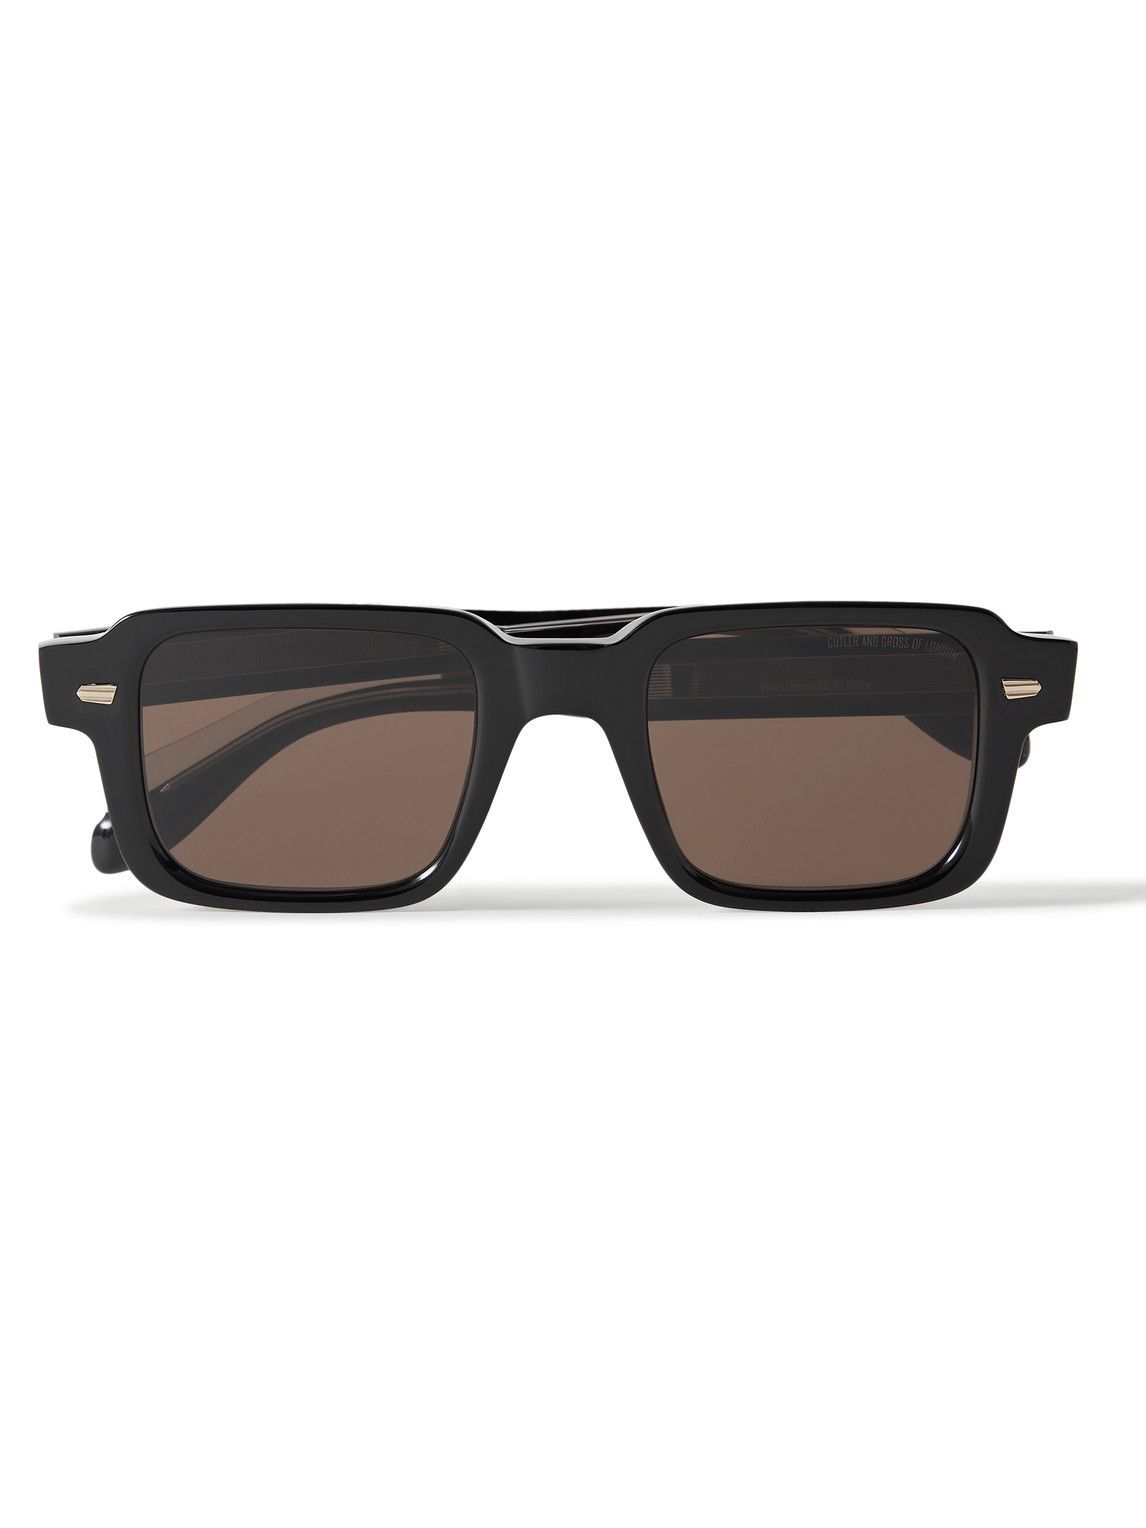 Cutler and Gross - 1393 Rectangle-Frame Acetate Sunglasses Cutler and Gross